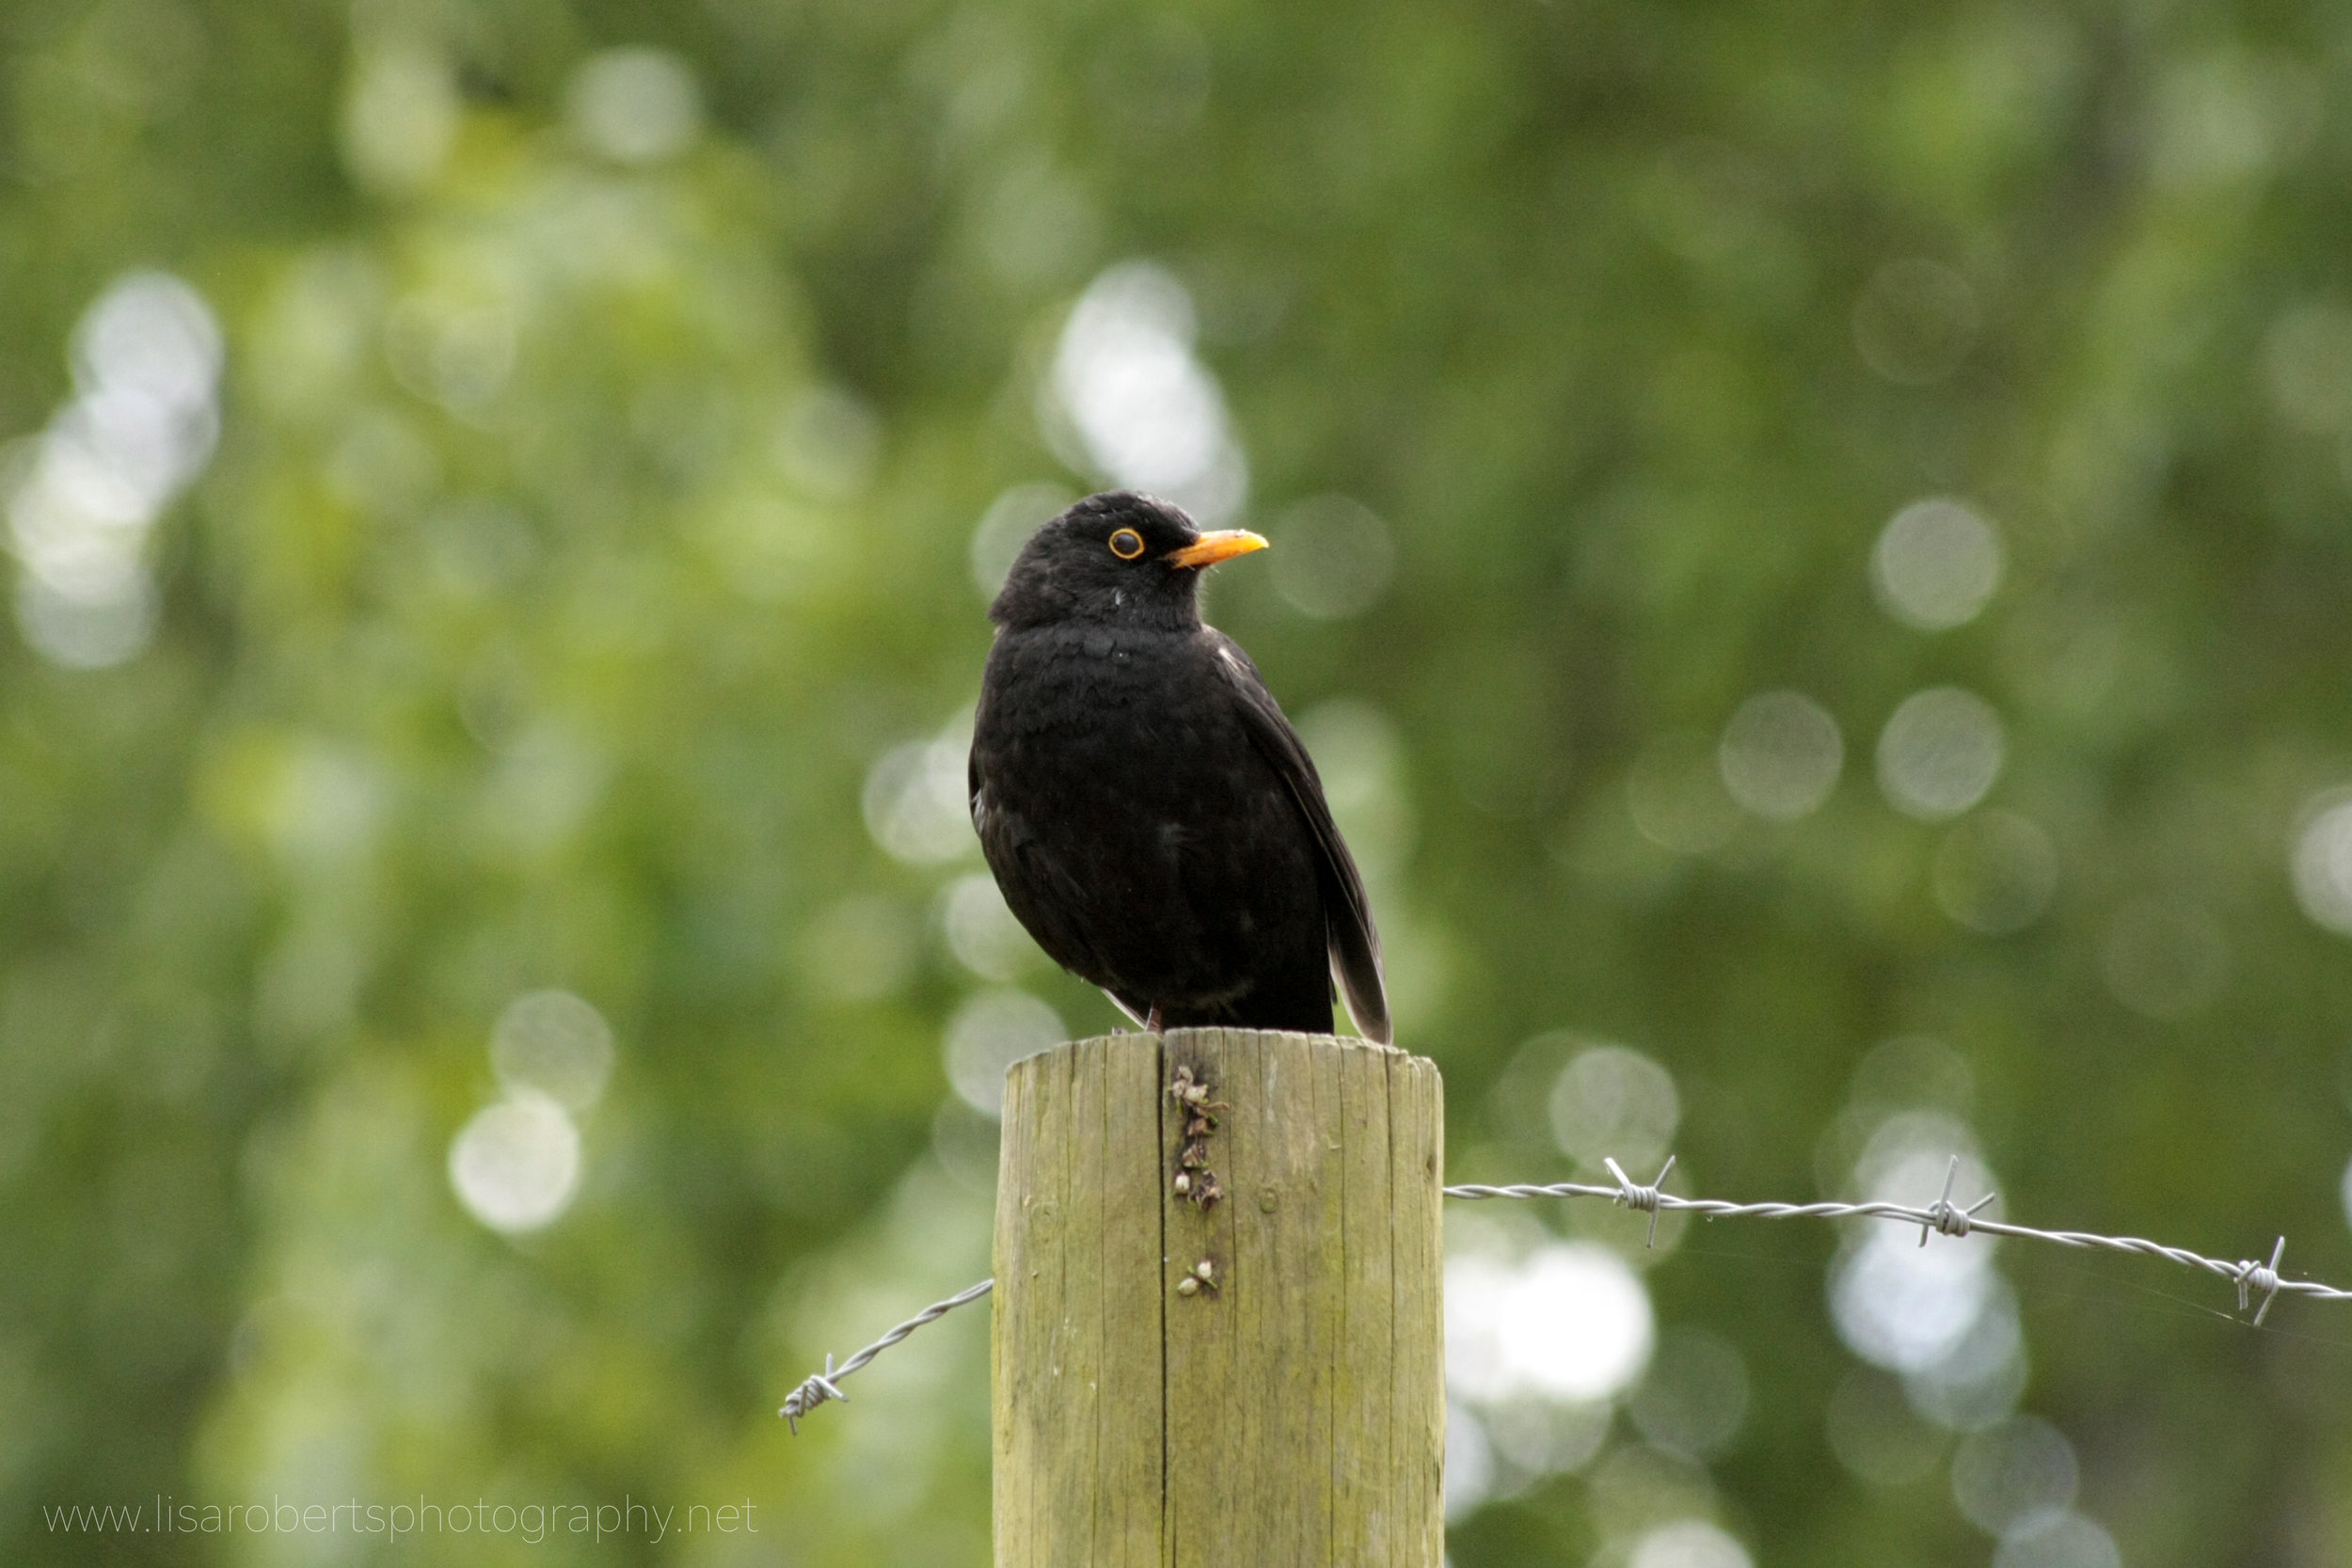  Male Blackbird on post 